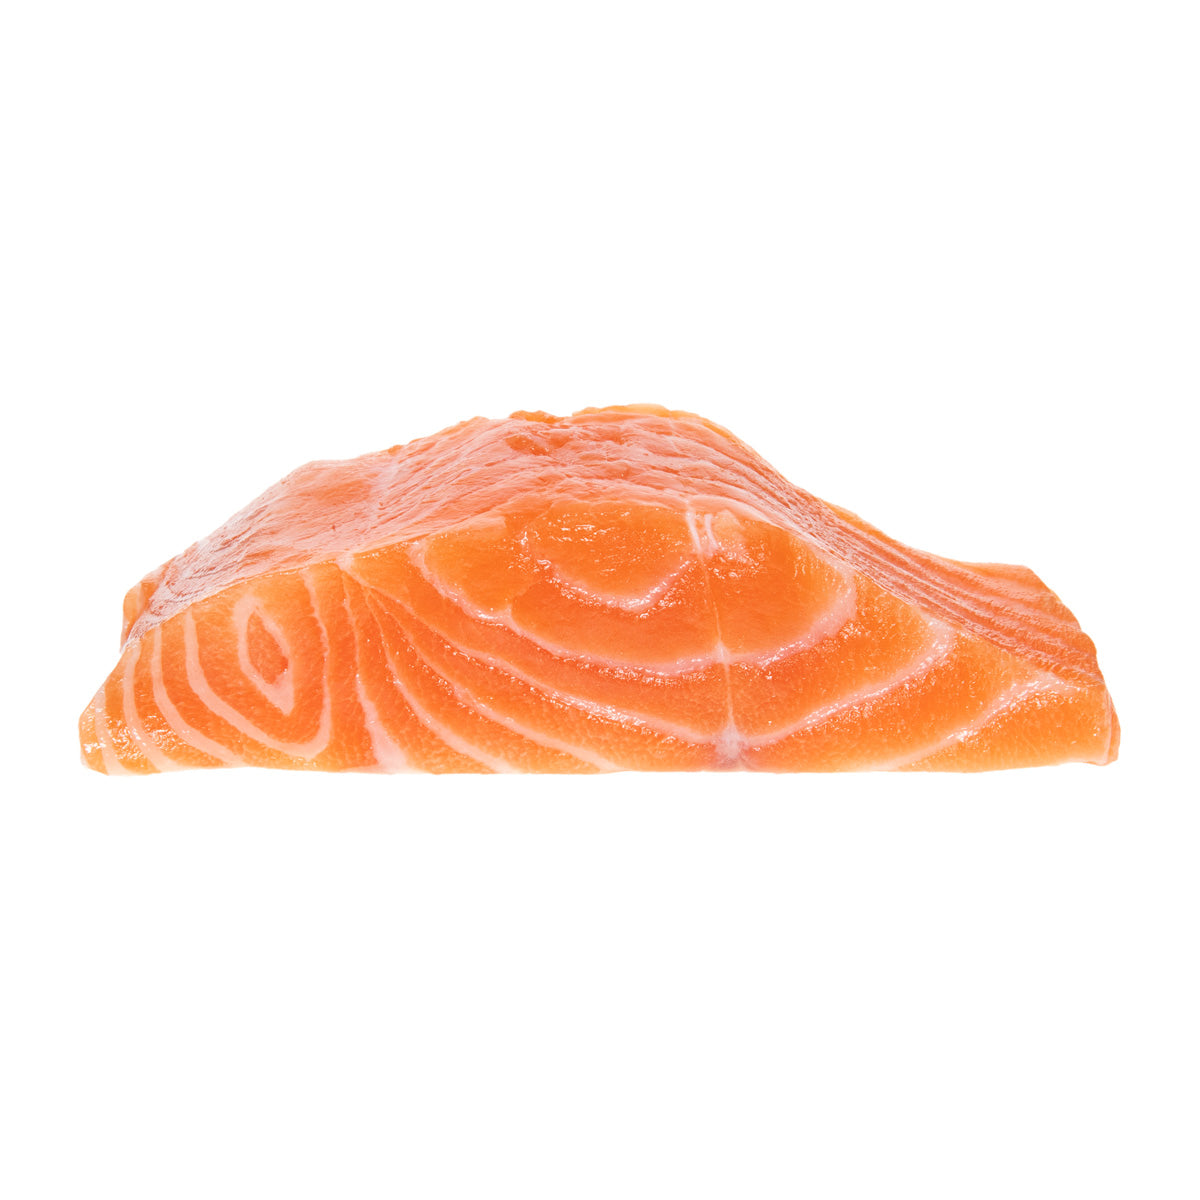 Pierless Fish Farm Raised Skinless PBO Scottish Salmon 6 oz 6 OZ